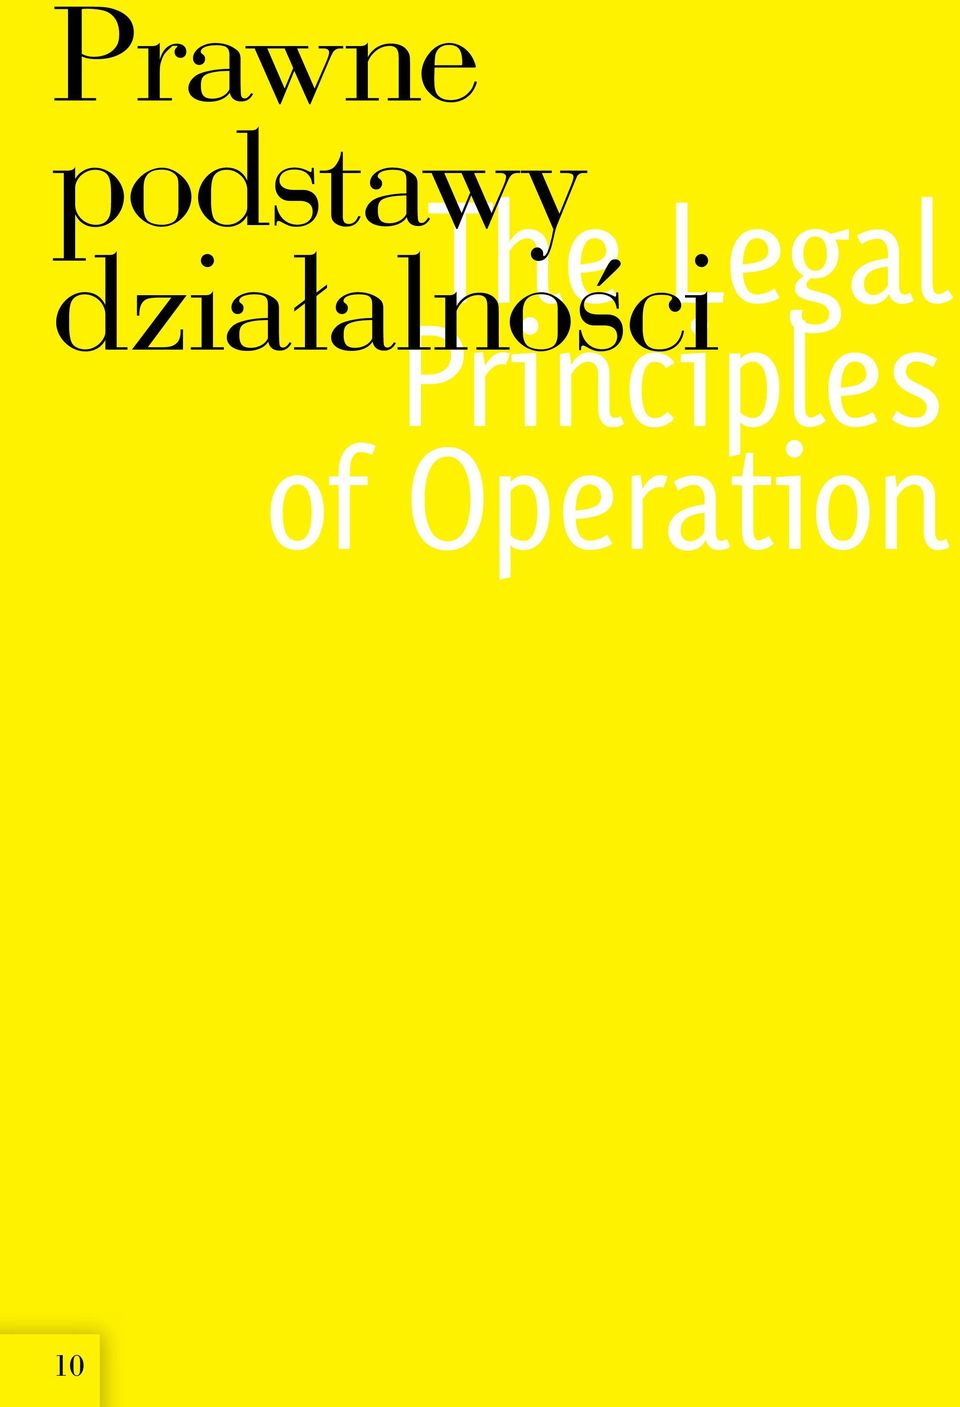 Legal Principles